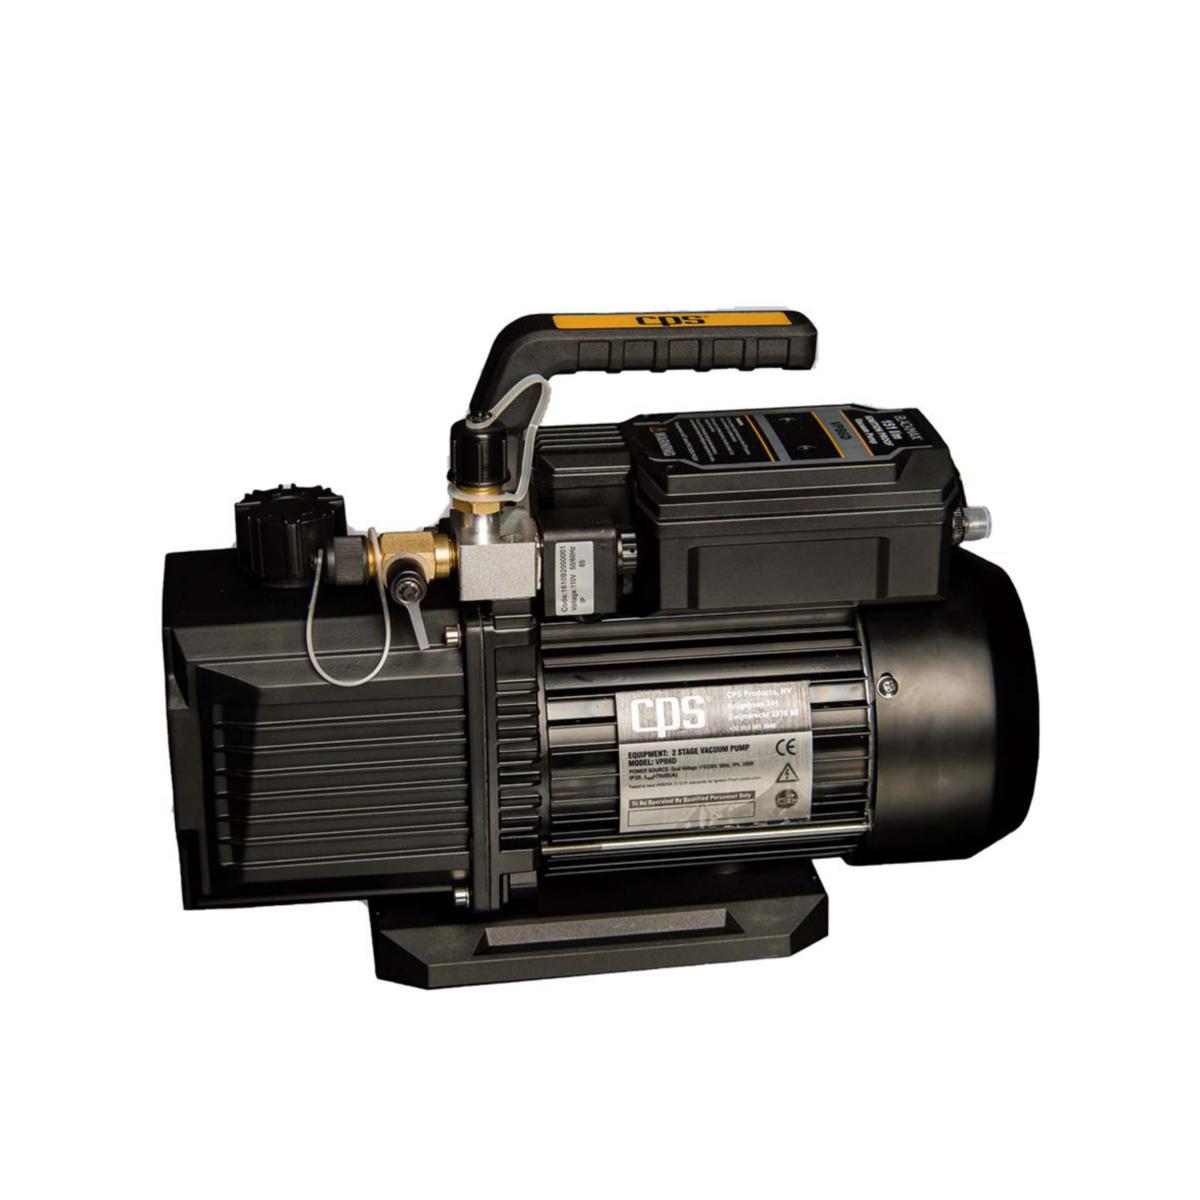 MILWAUKEE M18 FVP5-801 FUEL battery vacuum pump 5 cfm (1x 8.0Ah